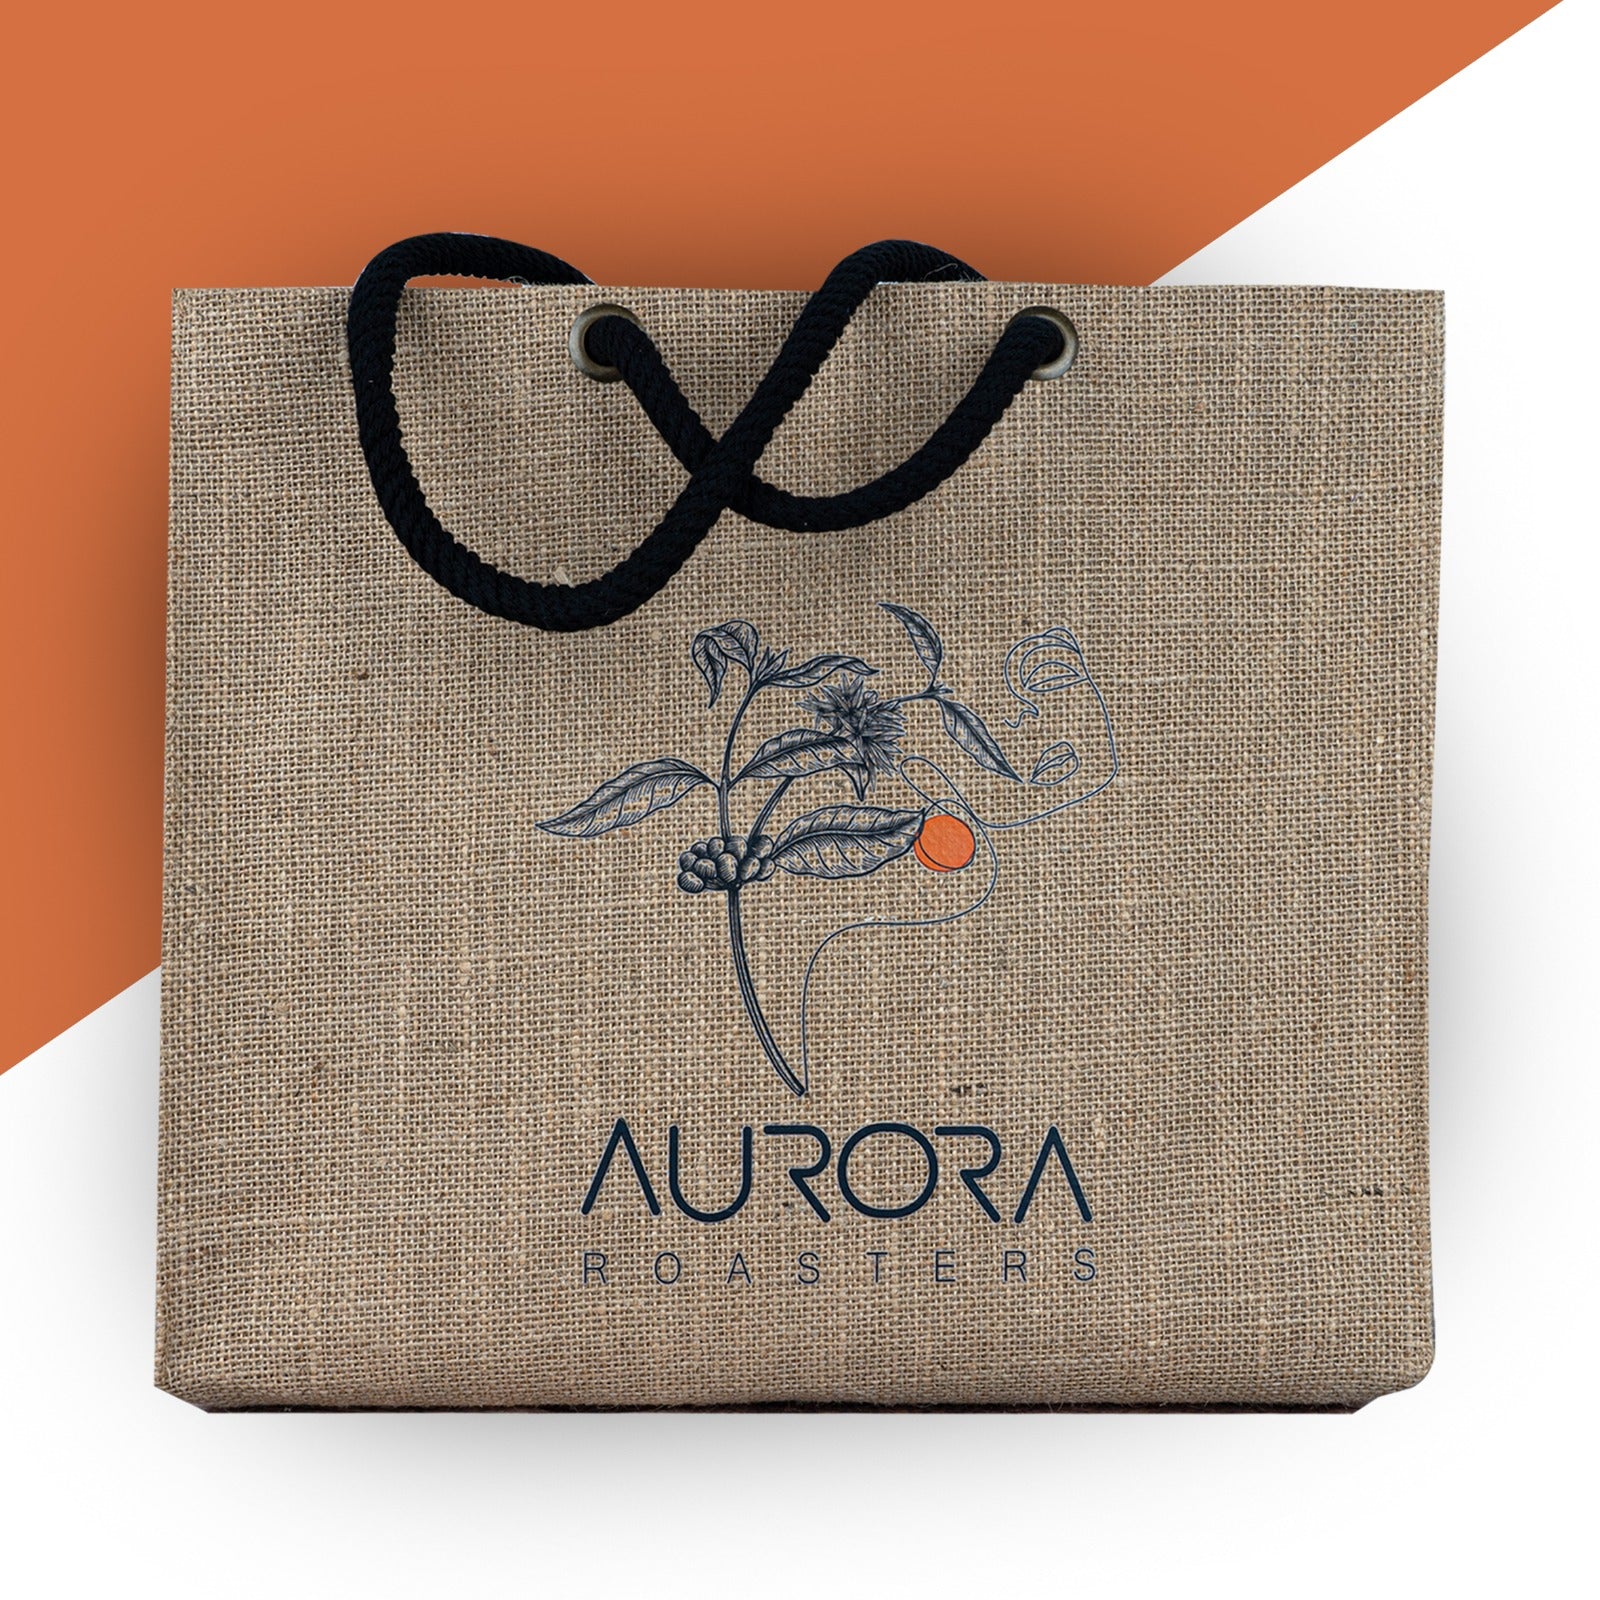 Aurora bag